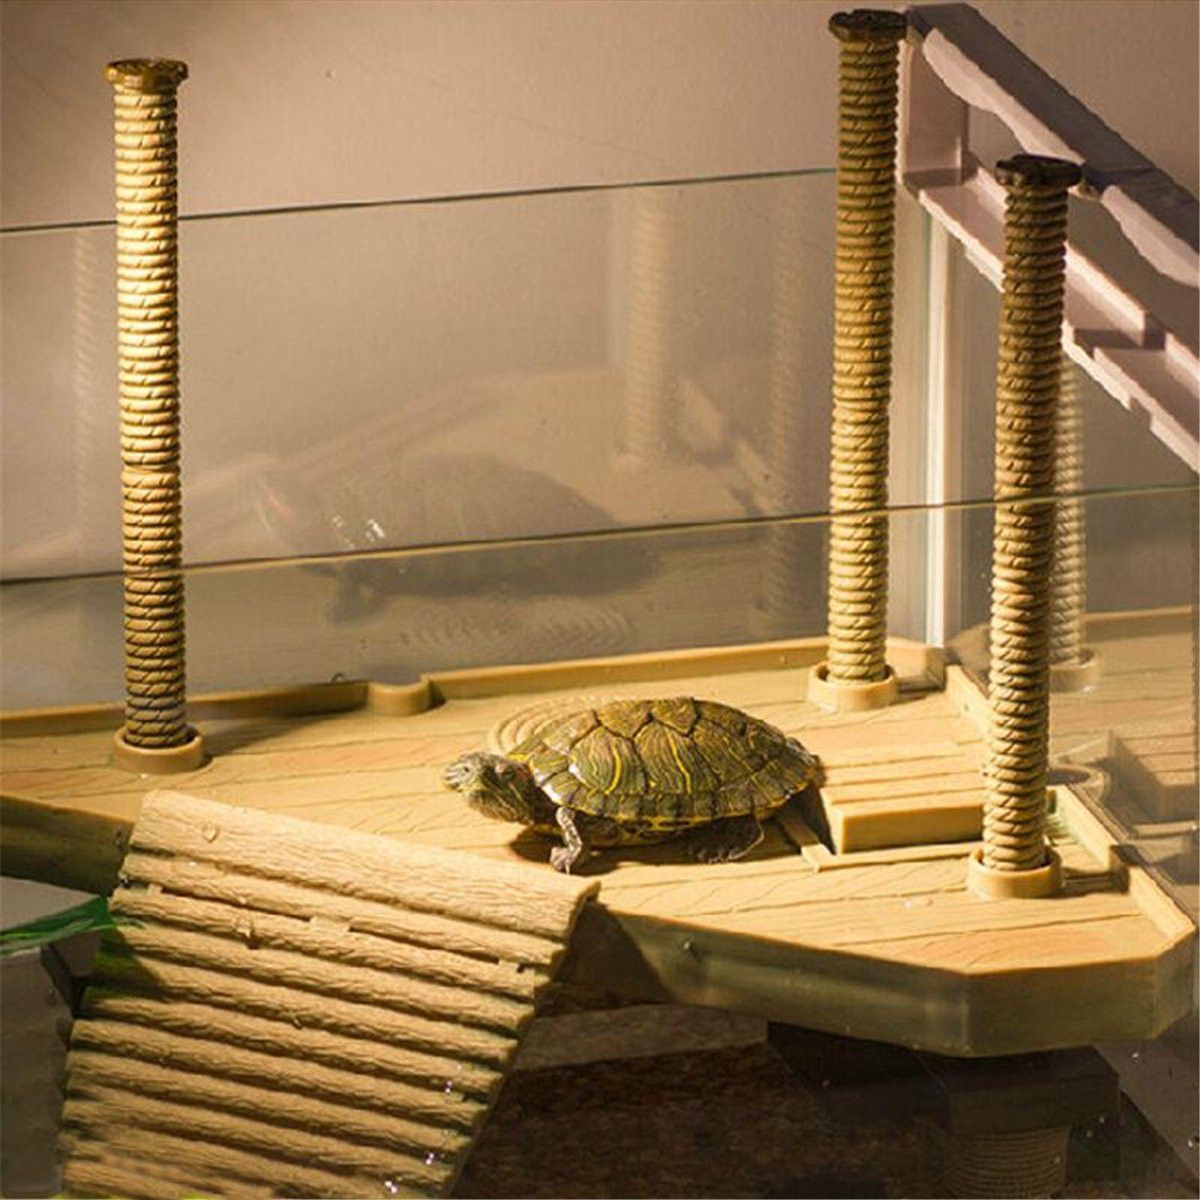 Reptile-Turtle-Basking-Frog-Pier-Floating-Platform-Ramp-Ladder-Aquarium-Decorations-1229583